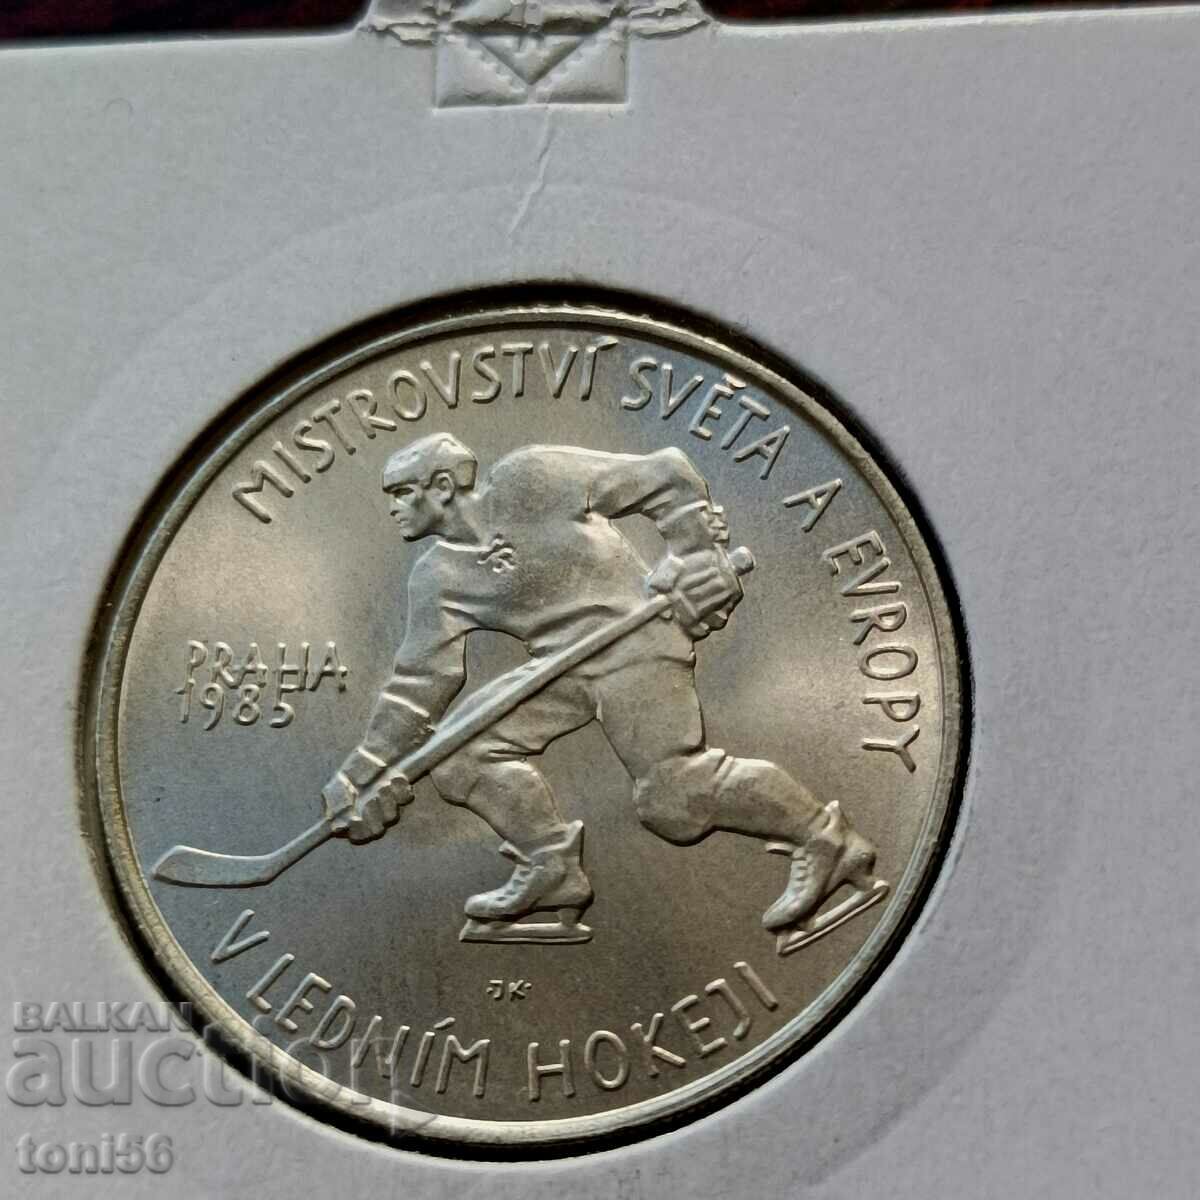 Czechoslovakia 100 kroner 1985 UNC - Silver Hockey